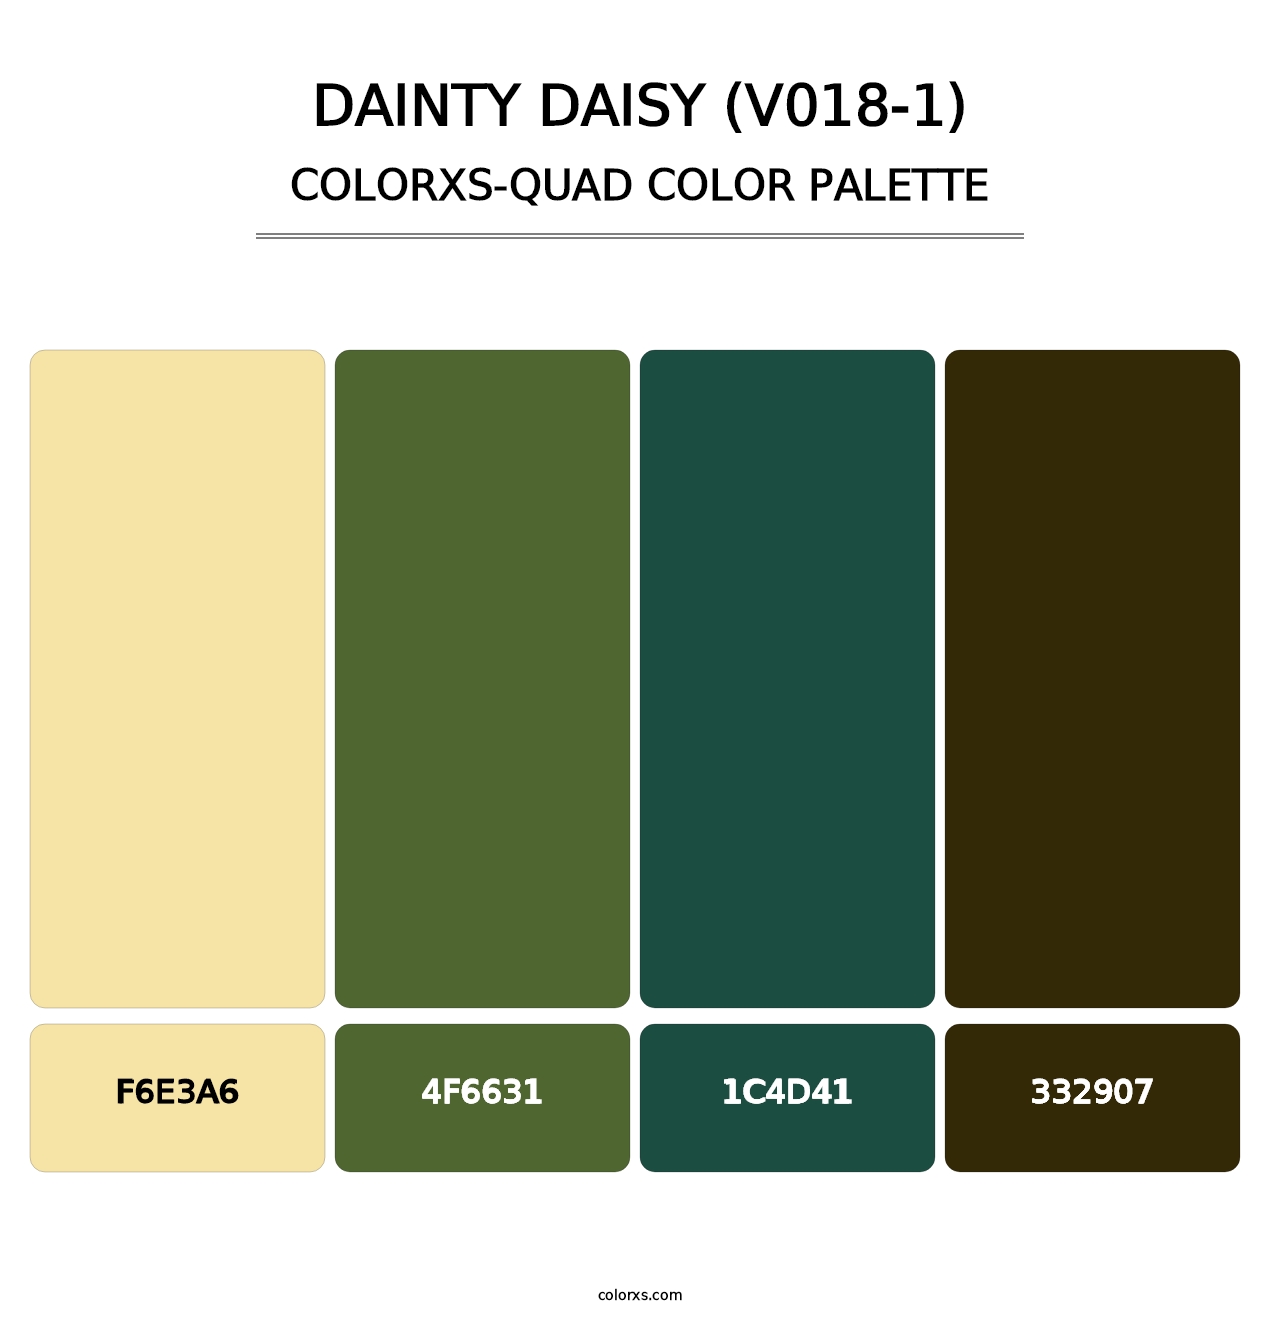 Dainty Daisy (V018-1) - Colorxs Quad Palette